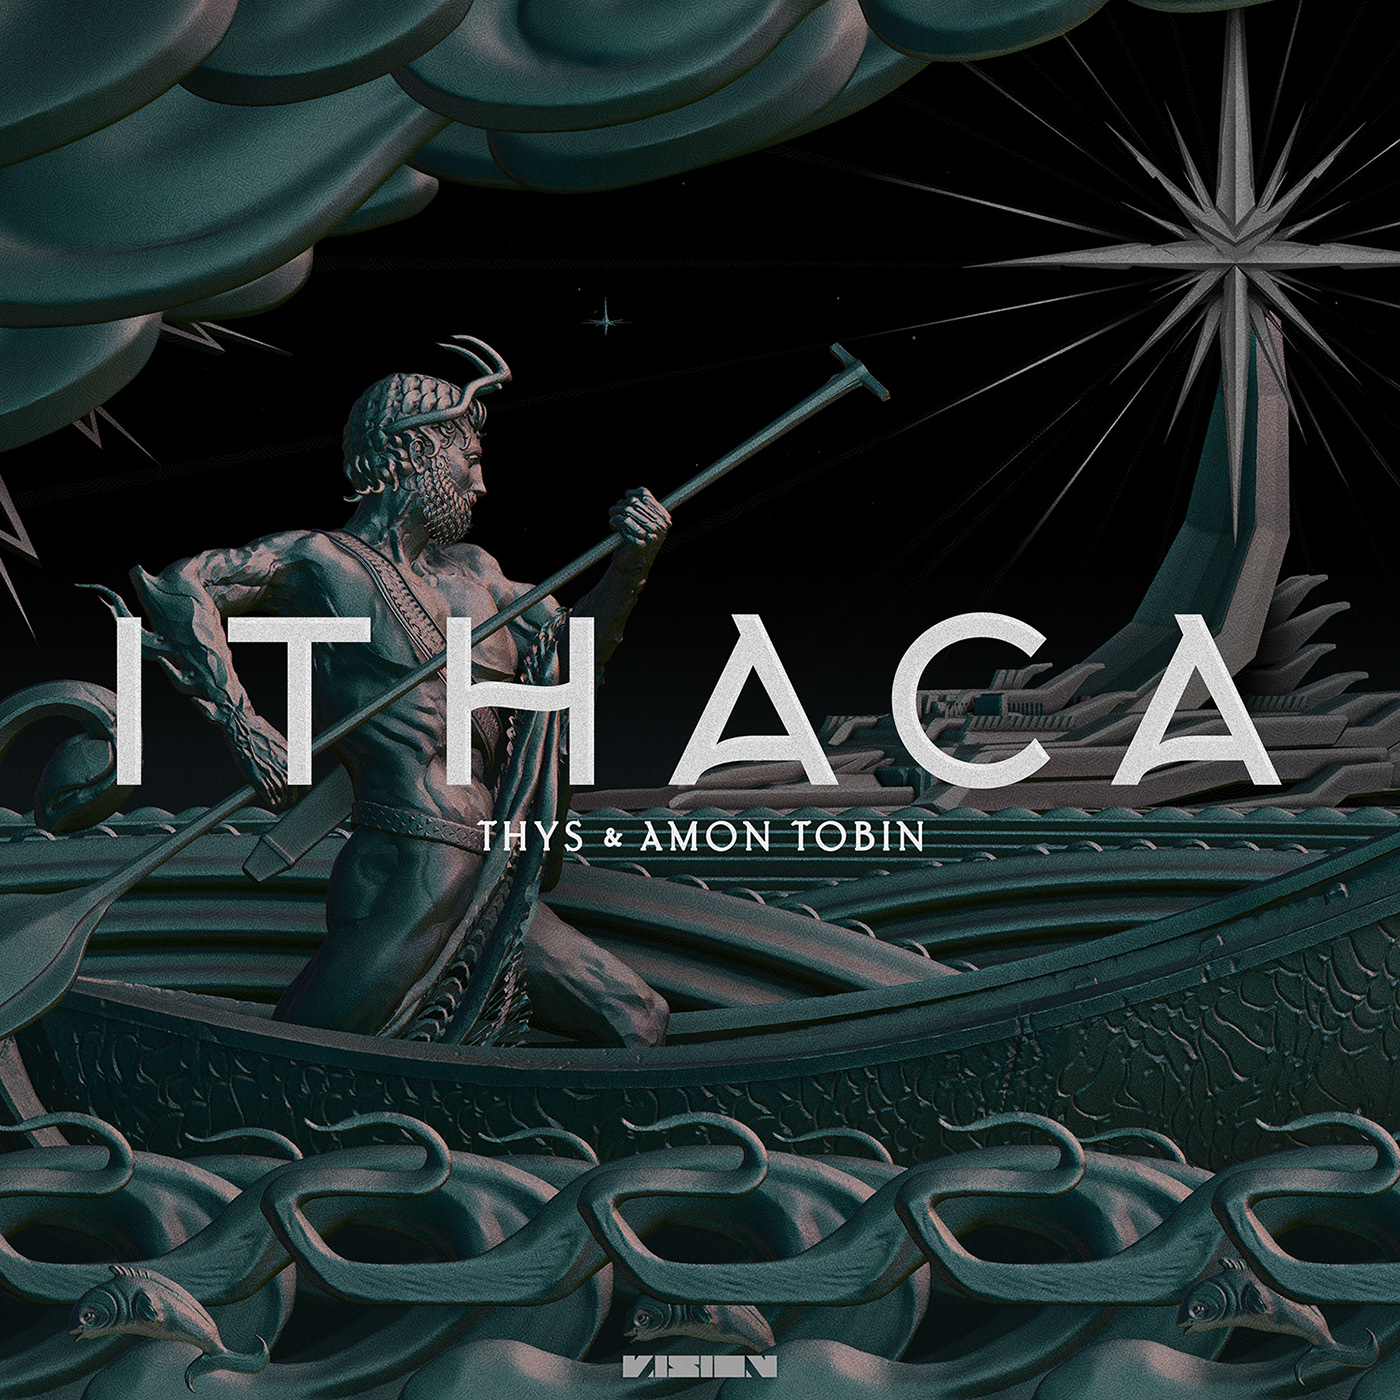 amon greek ithaca music mythology noisia odyssey thys tobin vision